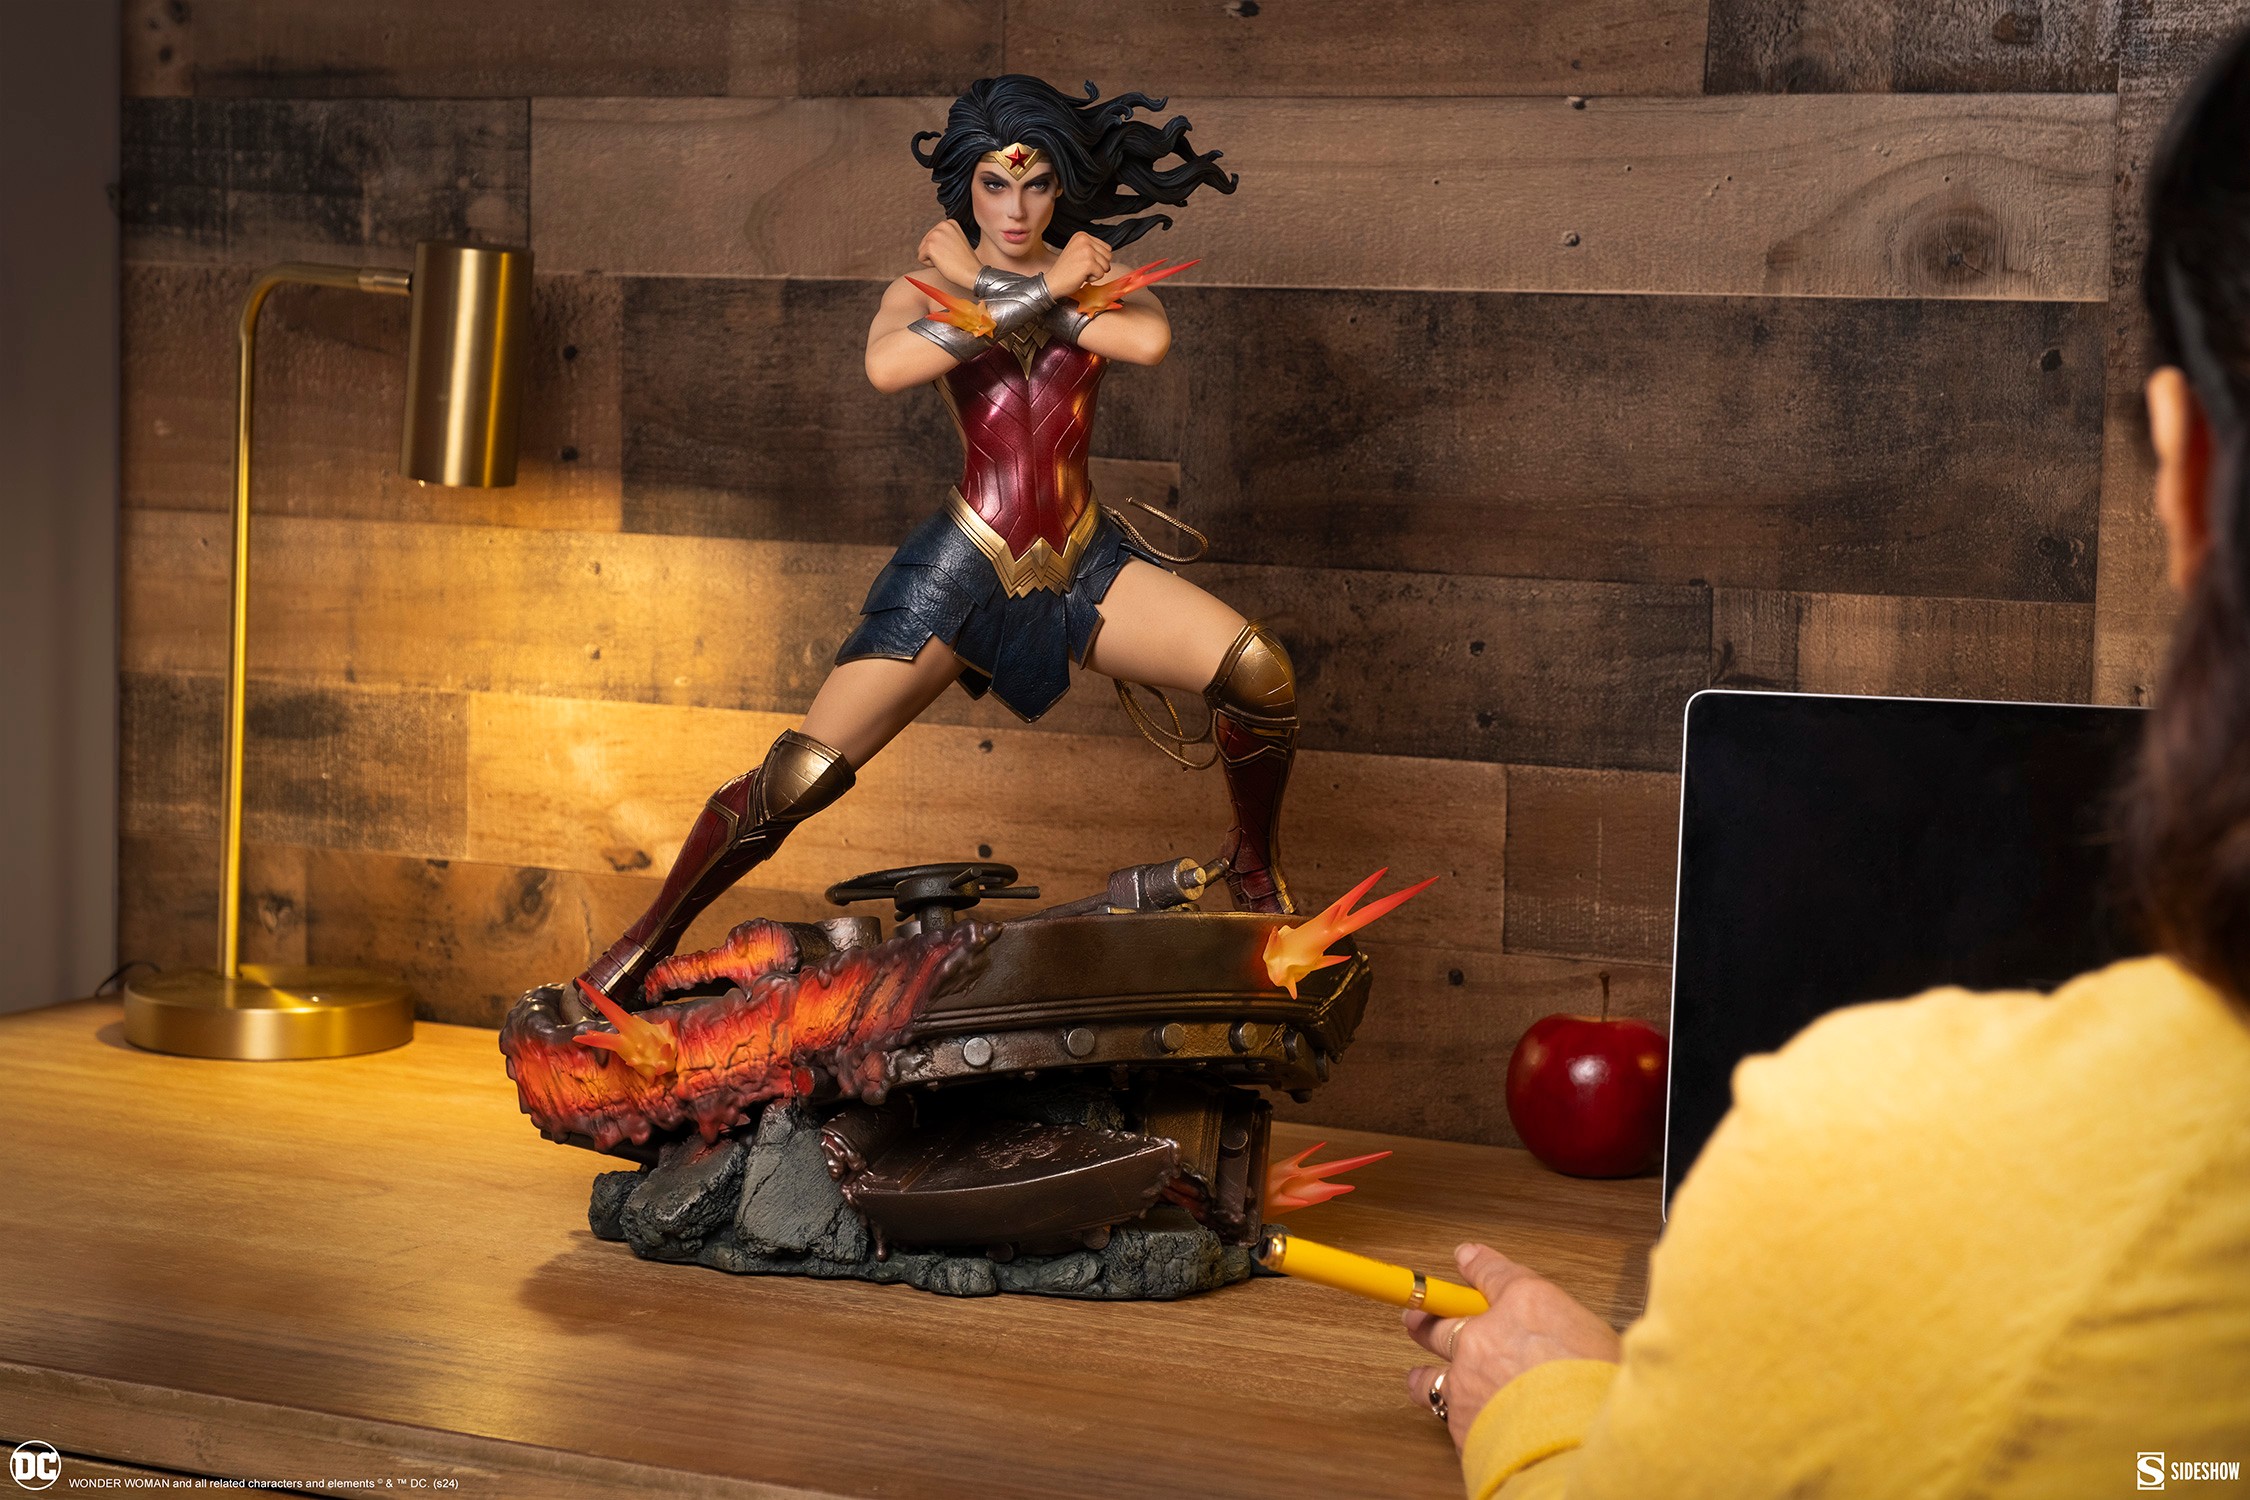 Wonder Woman: Saving the Day (Prototype Shown) View 1